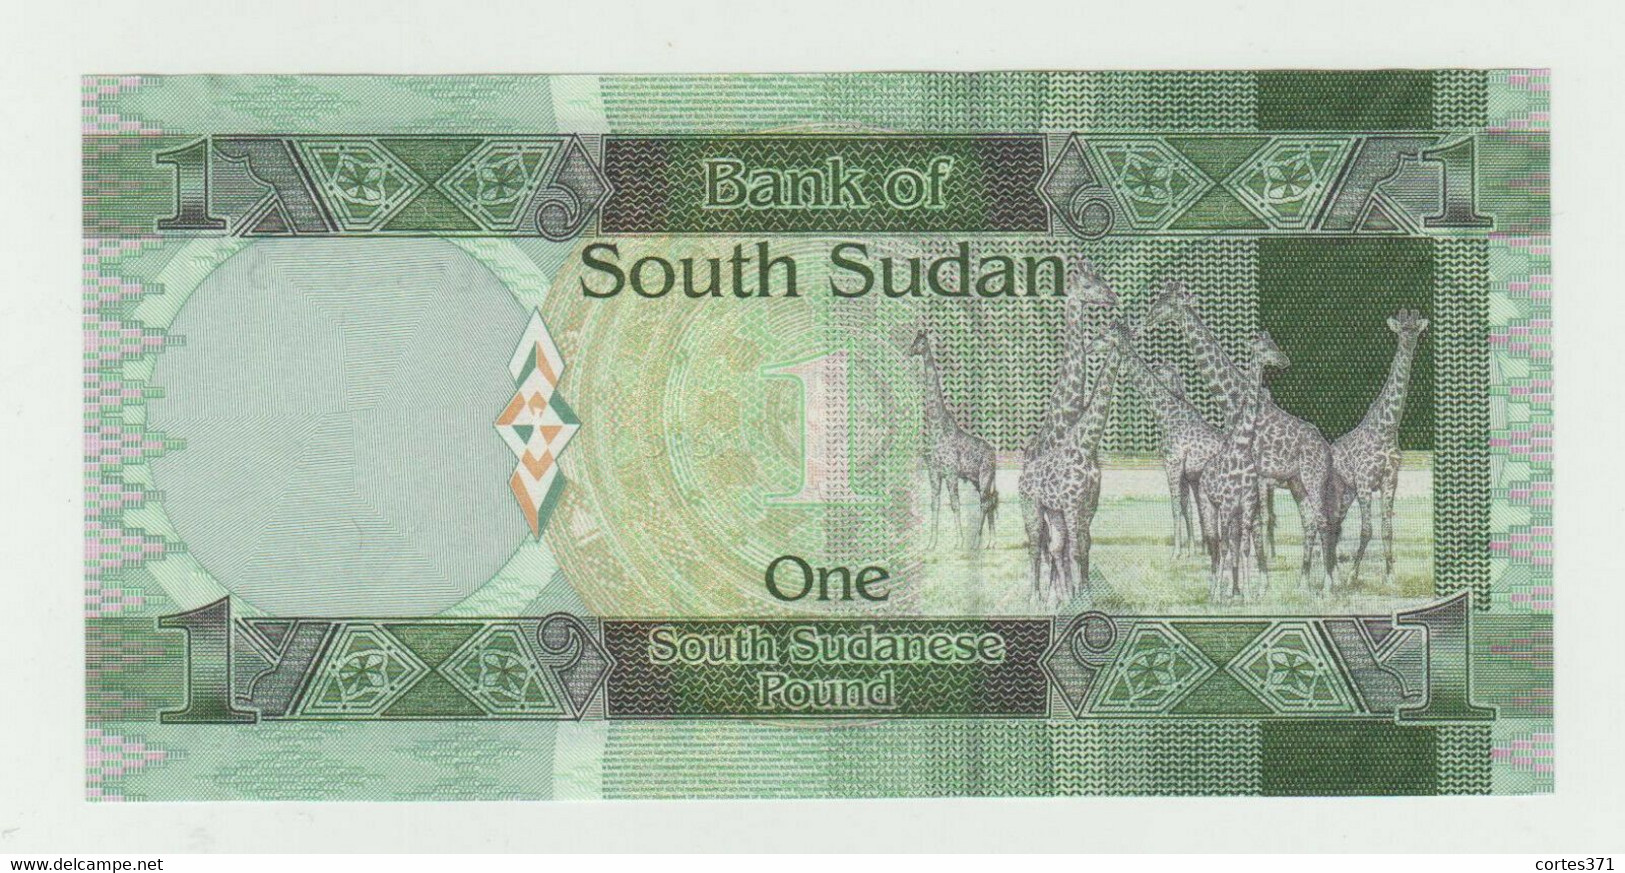 South Sudan 1 Pound 2011 P-5 UNC - Zuid-Soedan